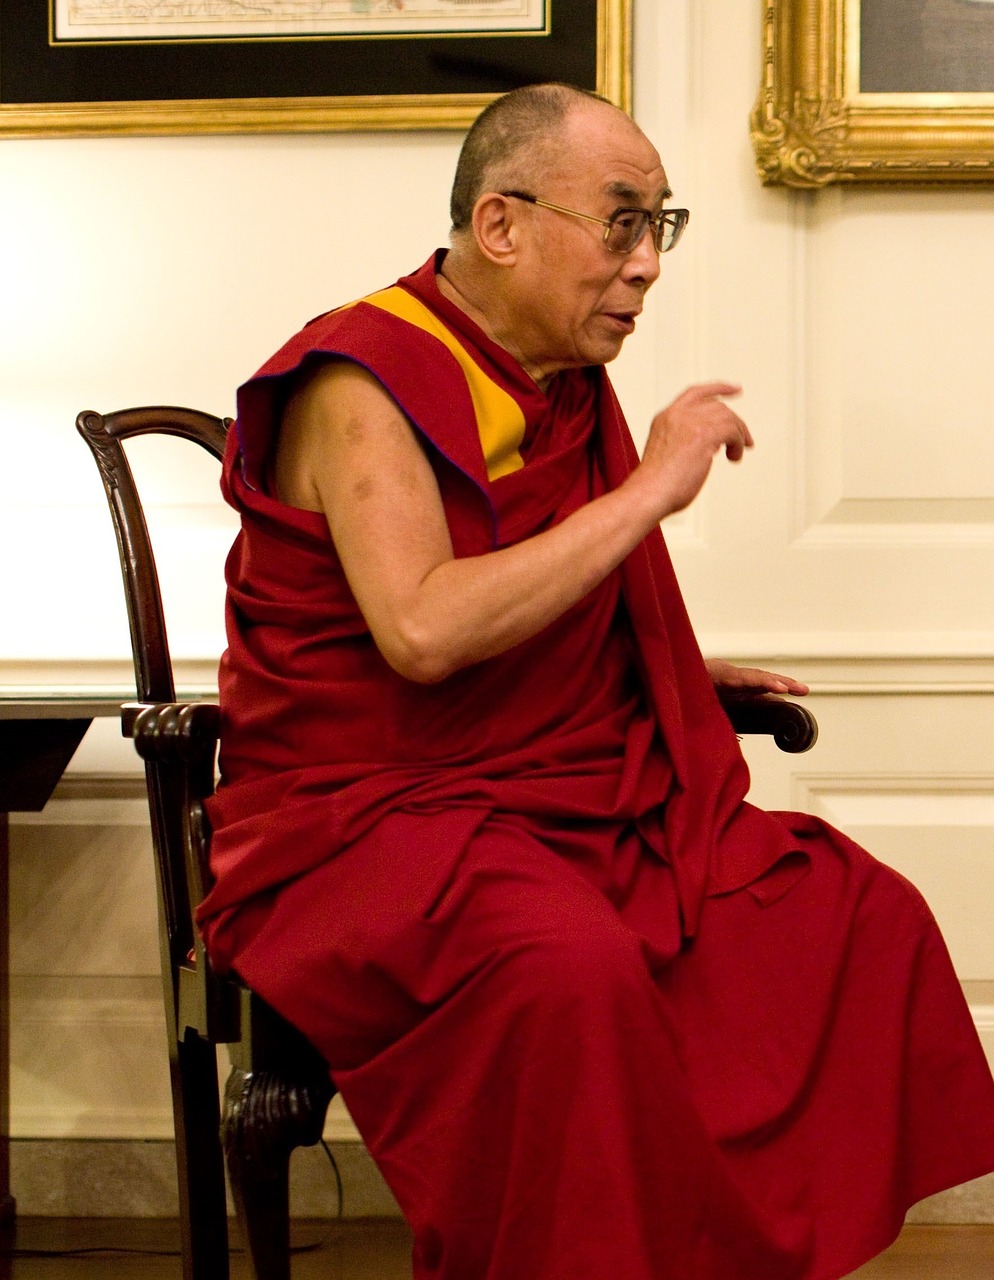 dalai lama portrait discussion free photo